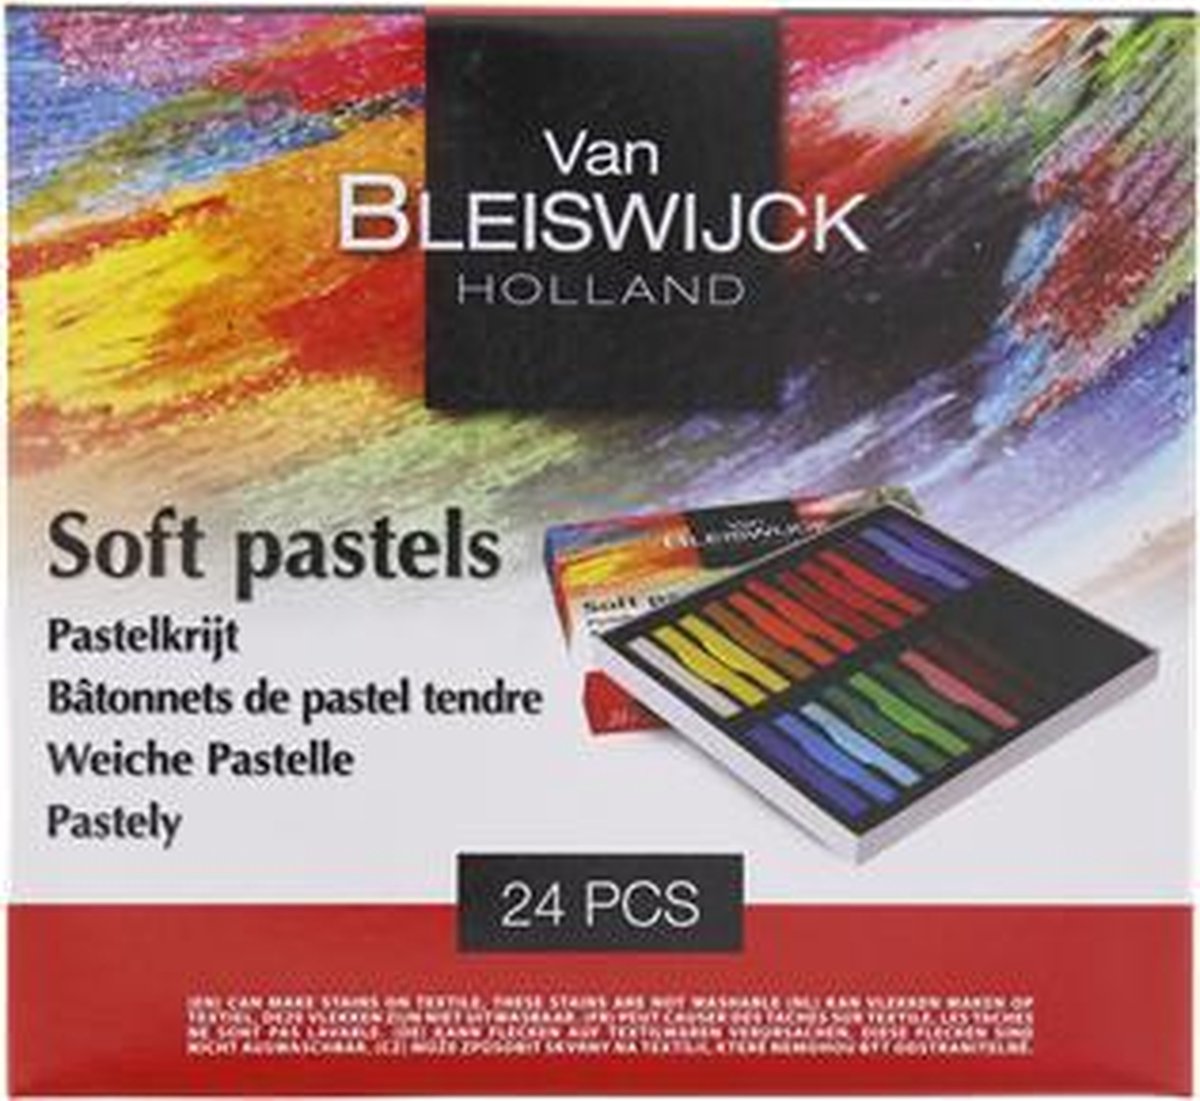 Van Bleiswijck Holland 24 unidades suave pastel 